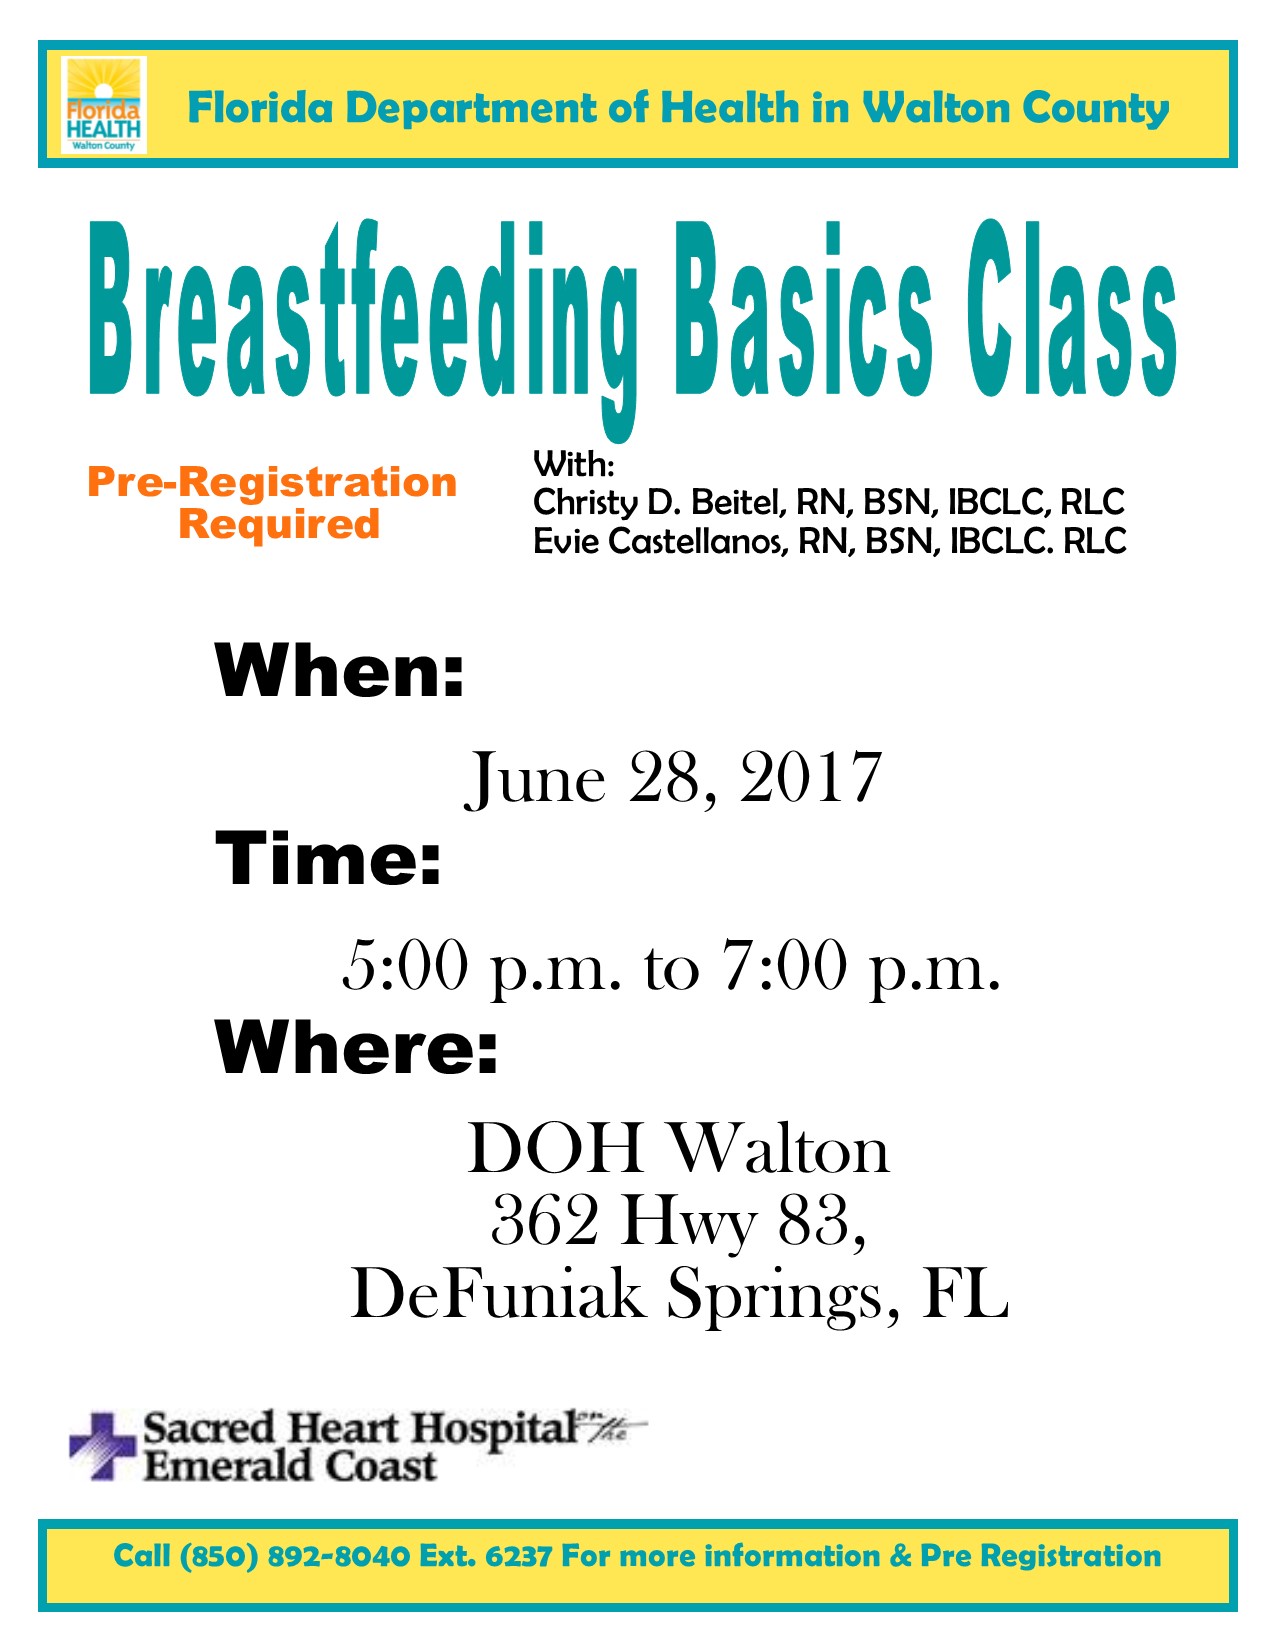 Breastfeeding classes